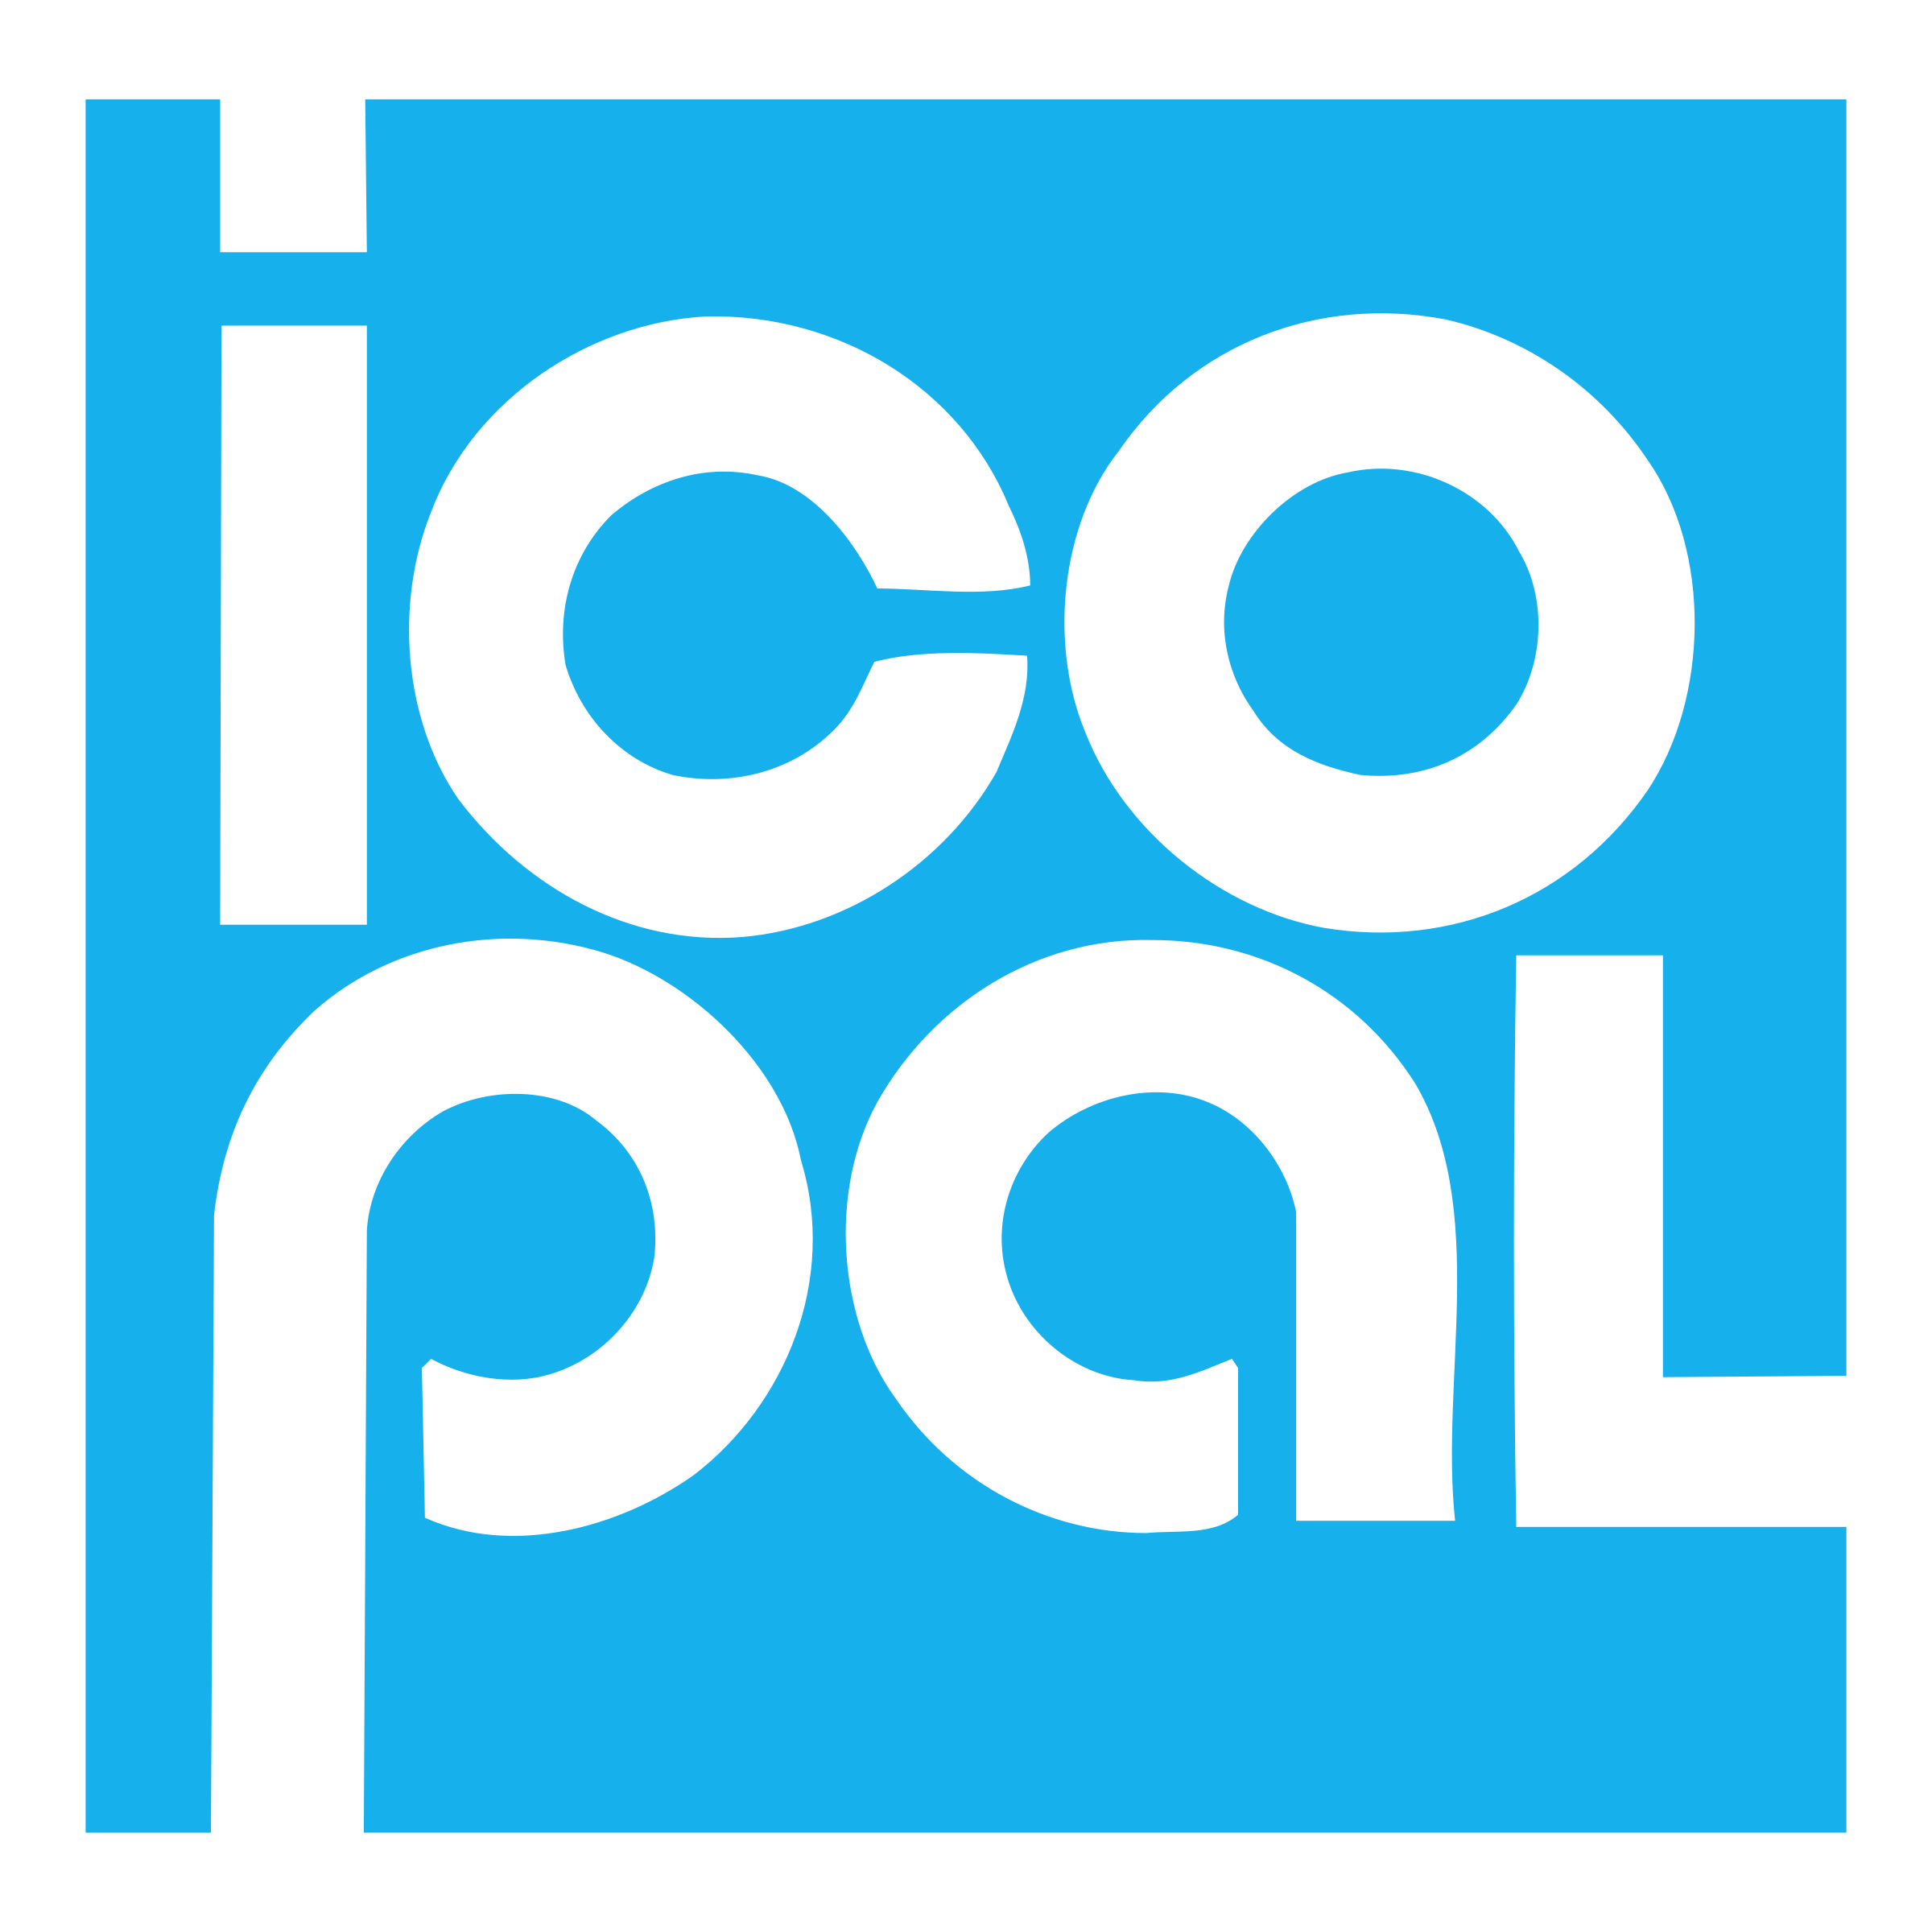 icopal logo png transparent